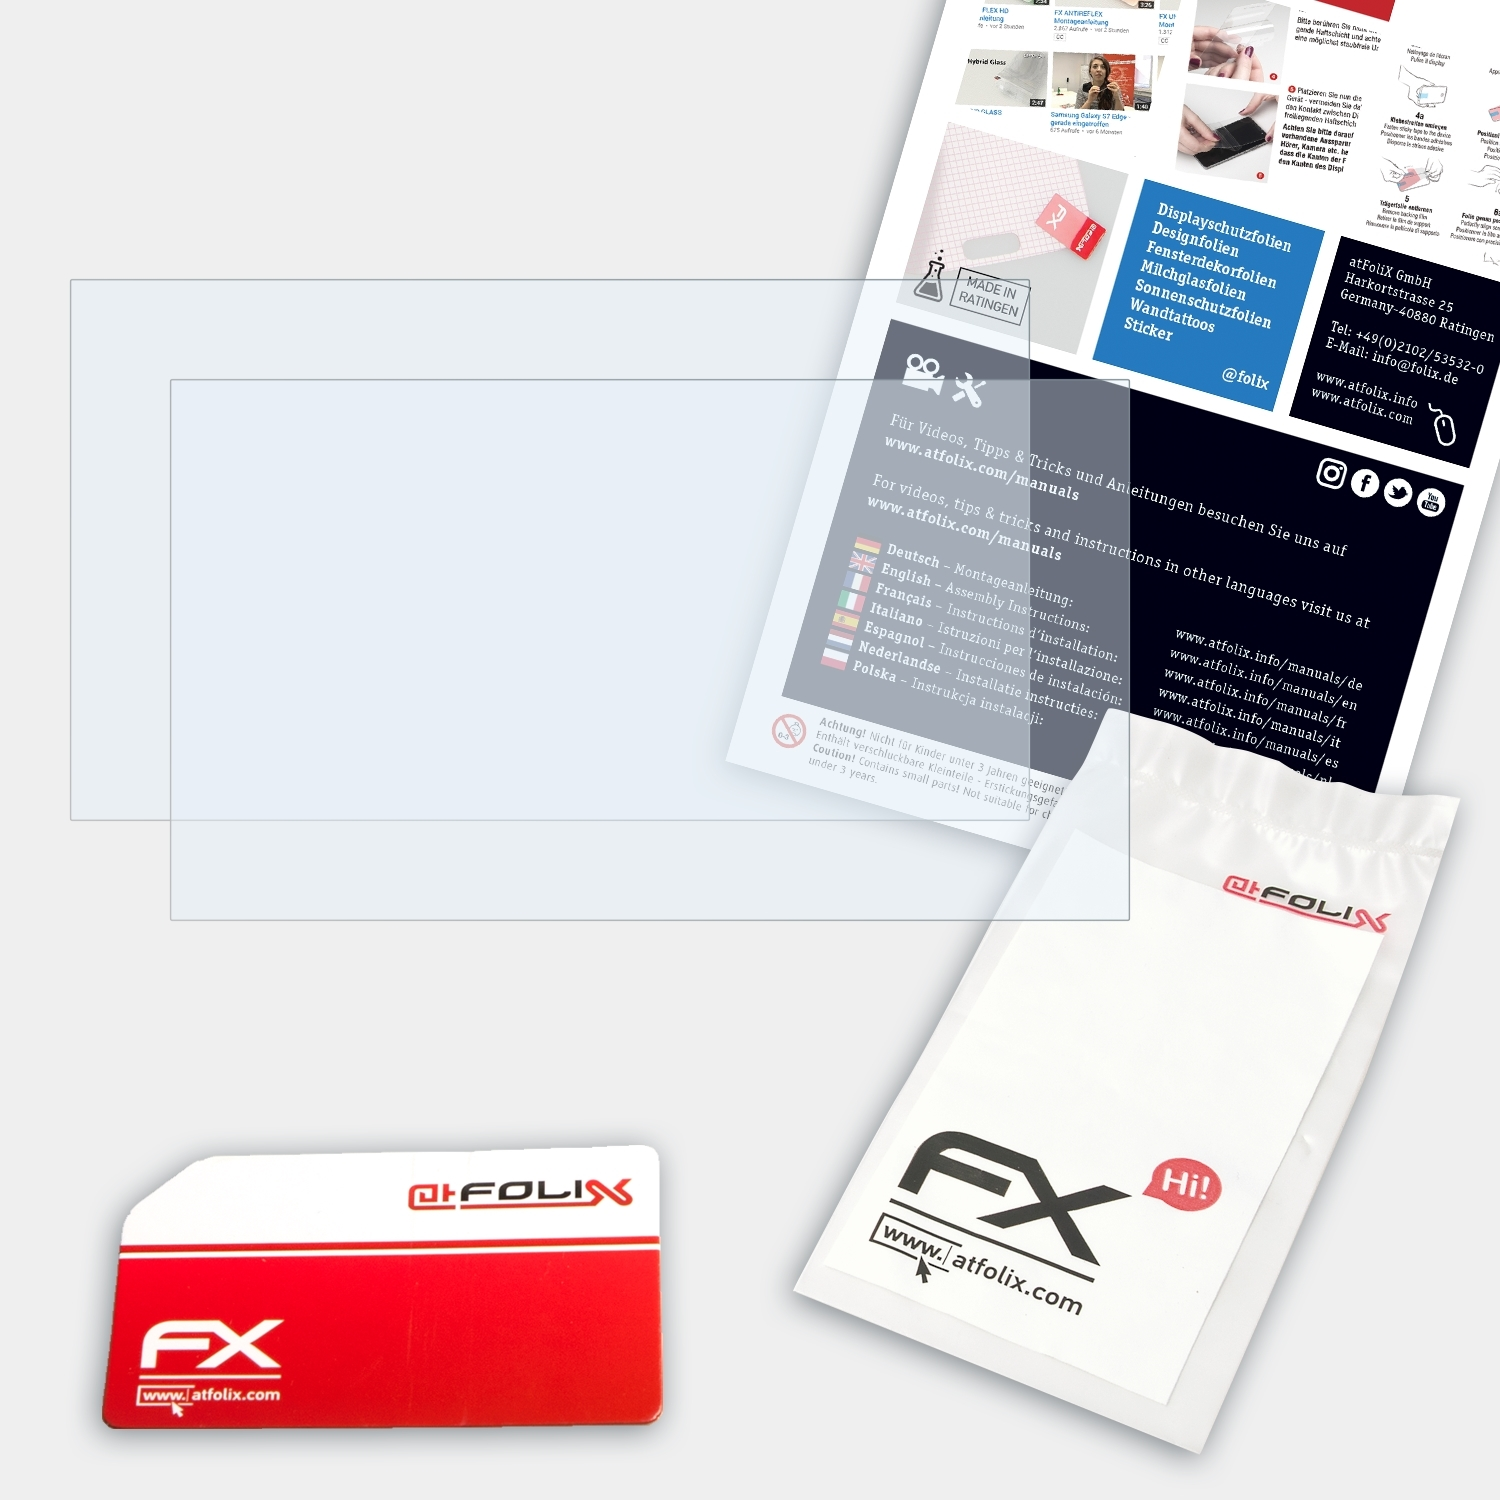 ATFOLIX FX-Clear Displayschutz(für 2x ThinkPad Lenovo T470P)